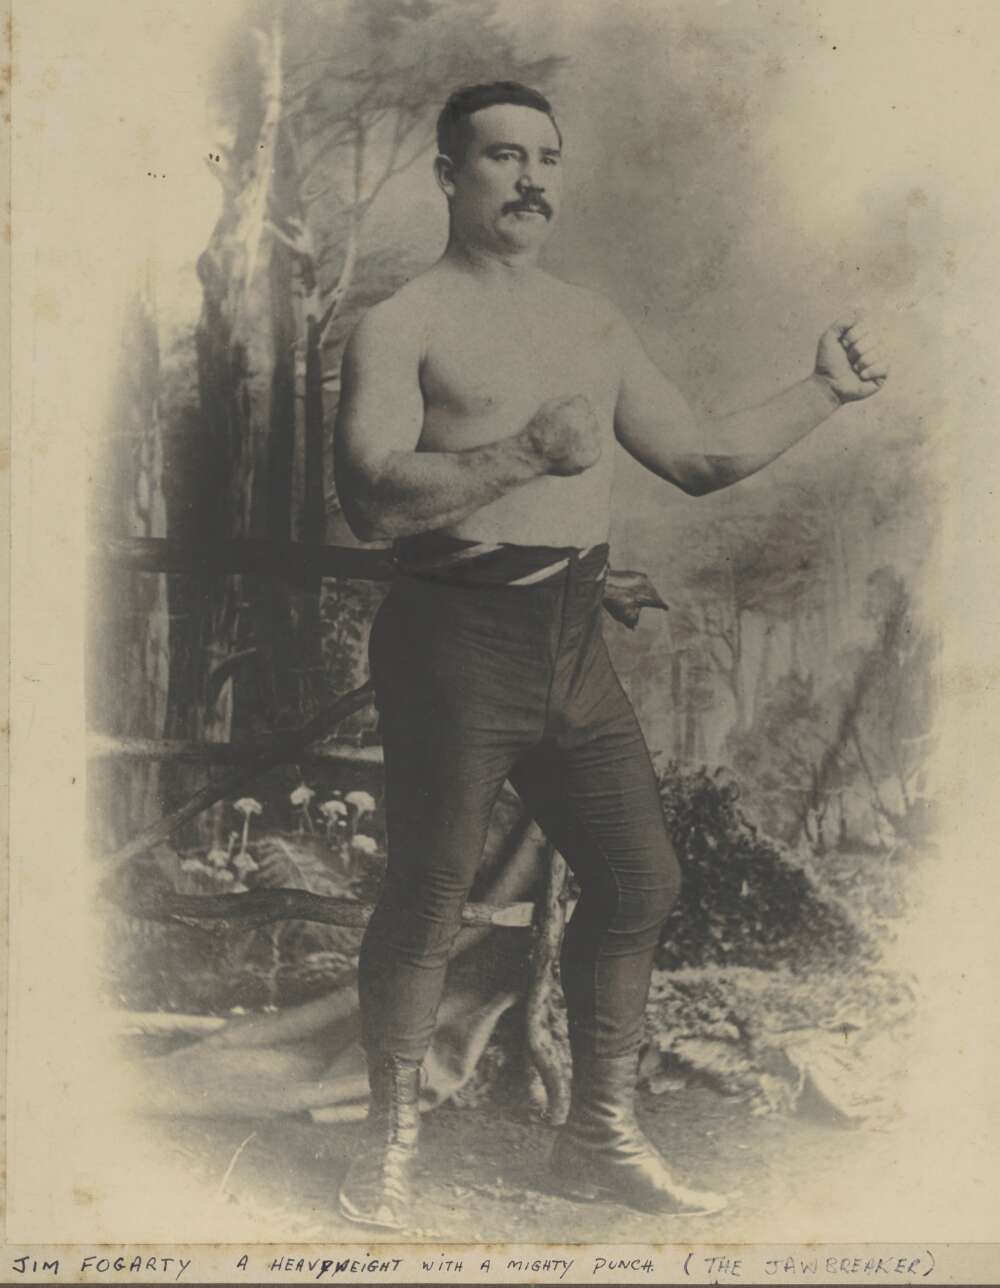 Photograph of boxer Jim Fogarty